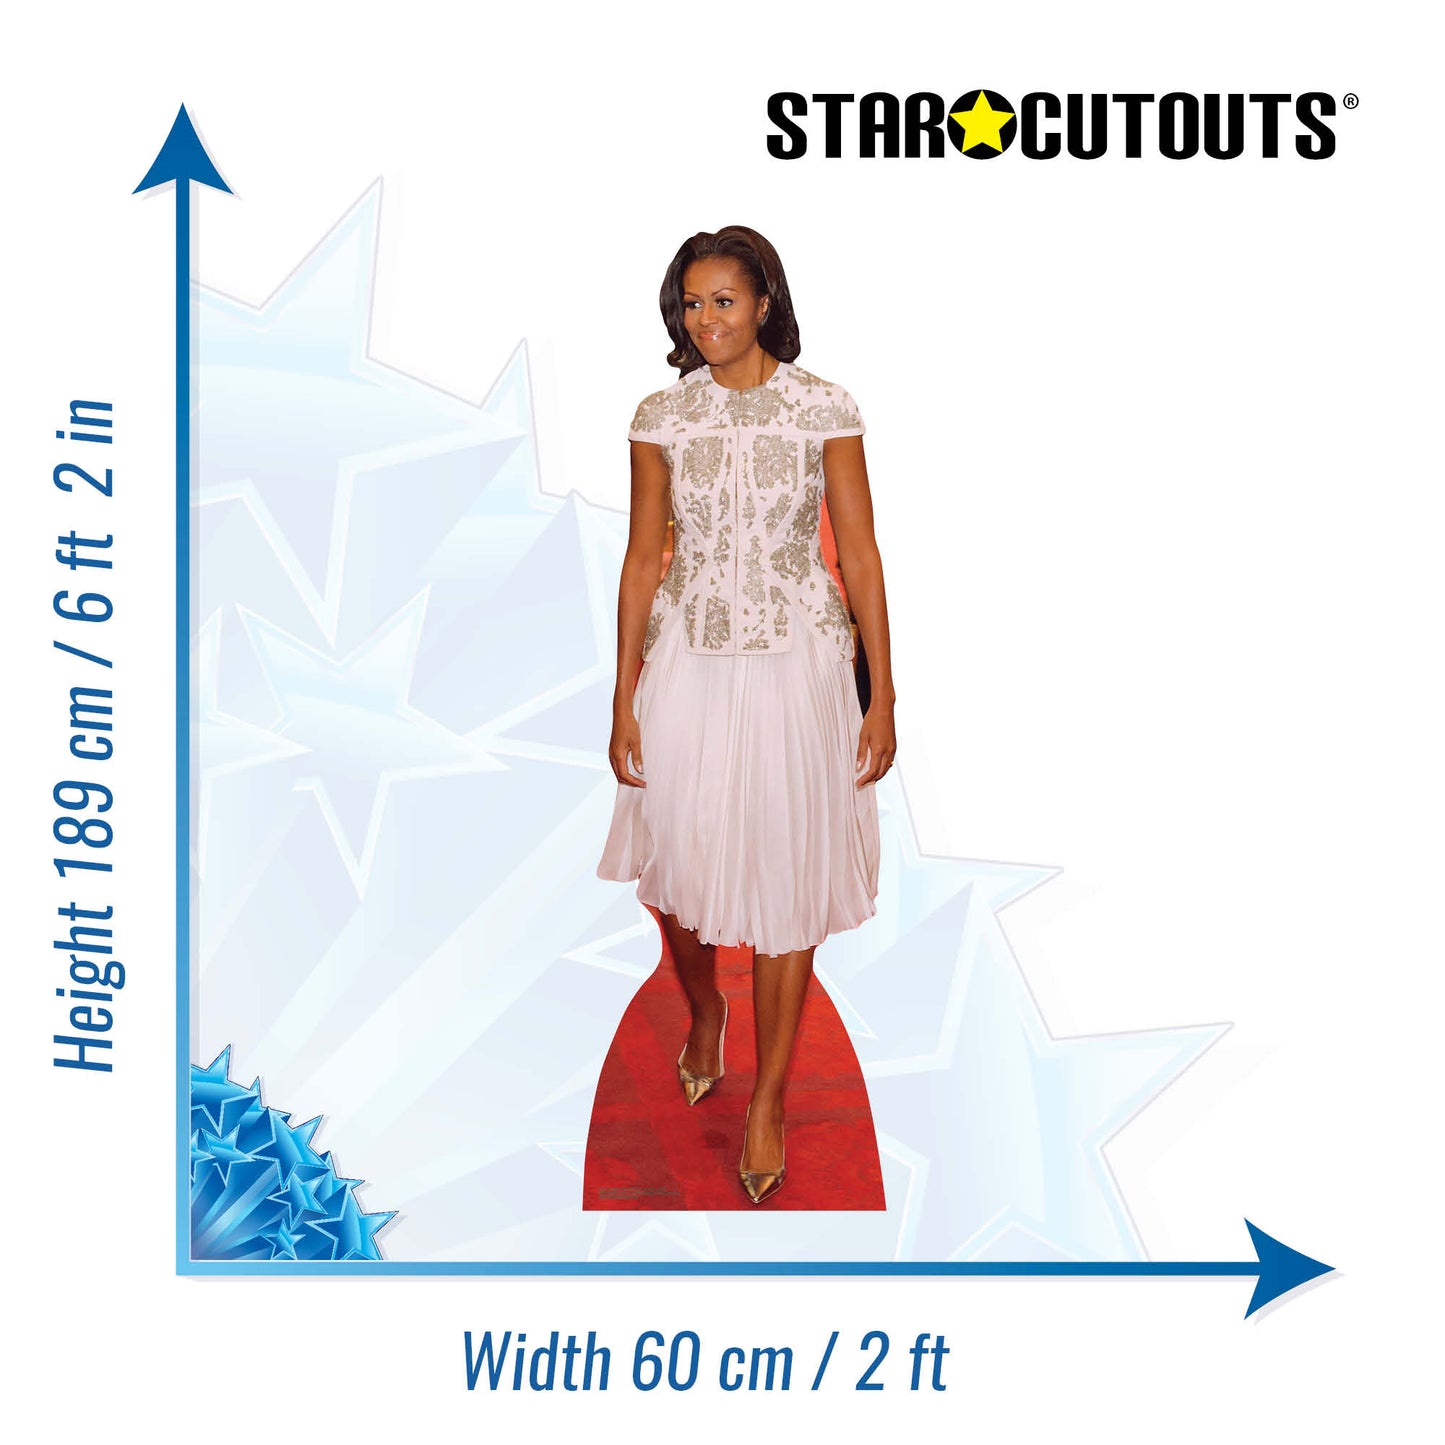 First Lady Michelle Obama Dress Cardboard Cutout Politician